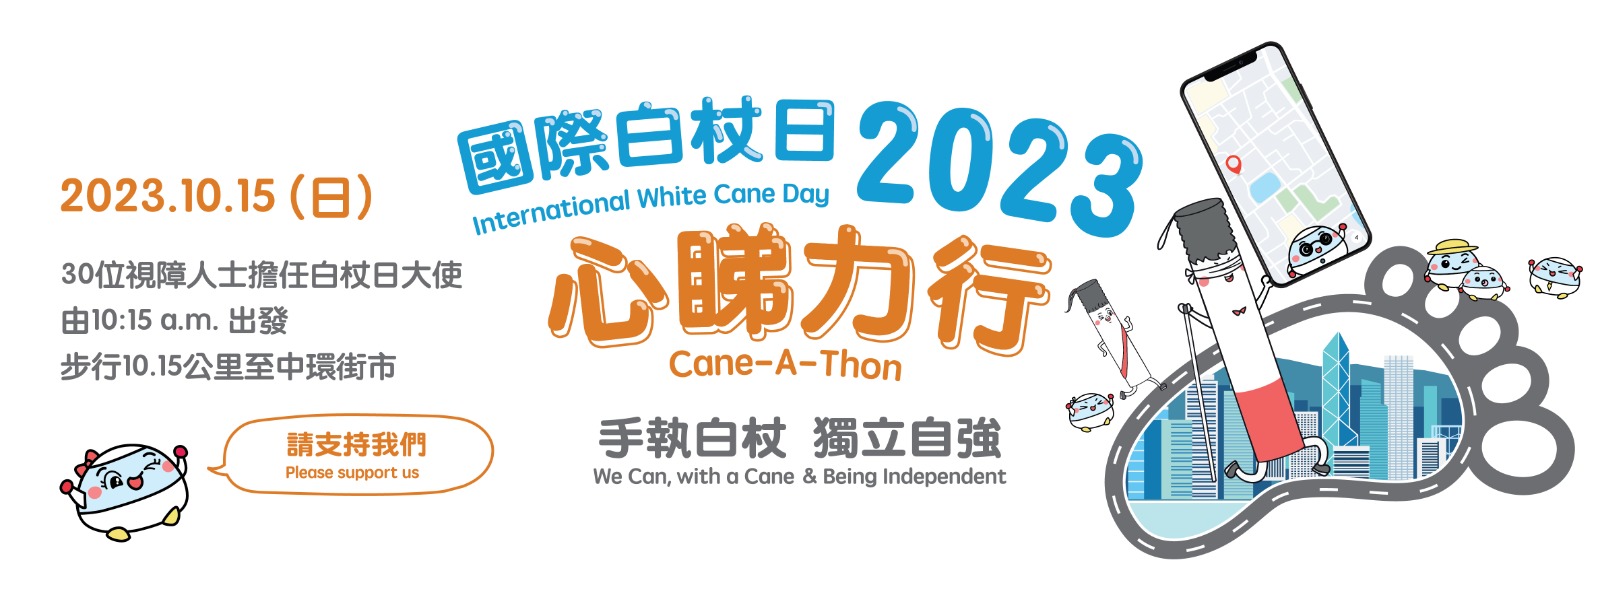 “Cane-A-Thon” - International White Cane Day 2023